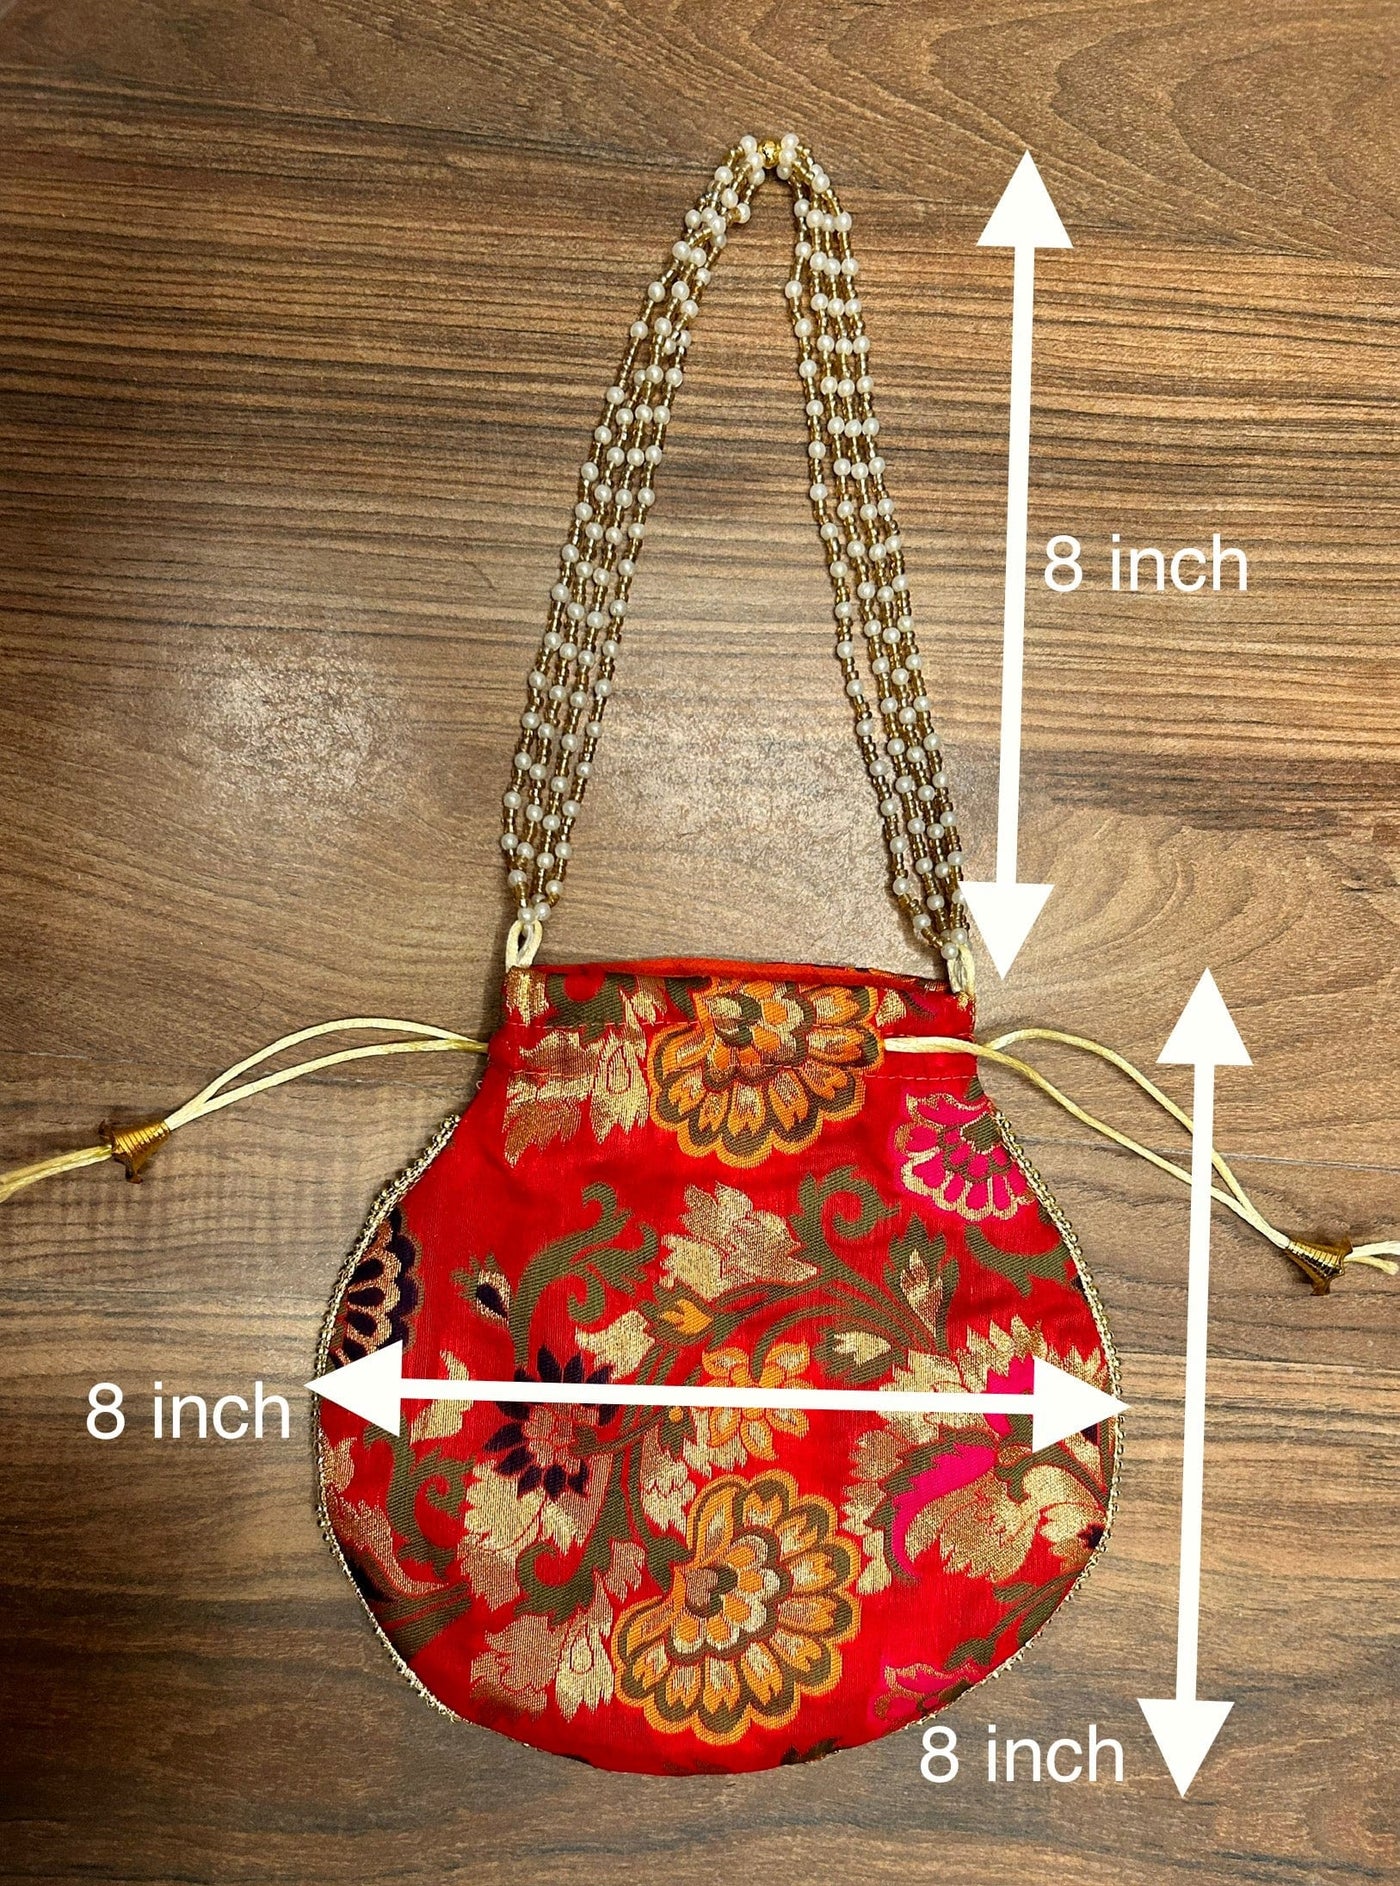 100 Rs each on buying 🏷in bulk | Call 📞 at 8619550223 Women's Potli Bag LAMANSH® (8*8 inch) Floral Banarasi print potli bags for gifting / Designer Potli bags for indian wedding favours